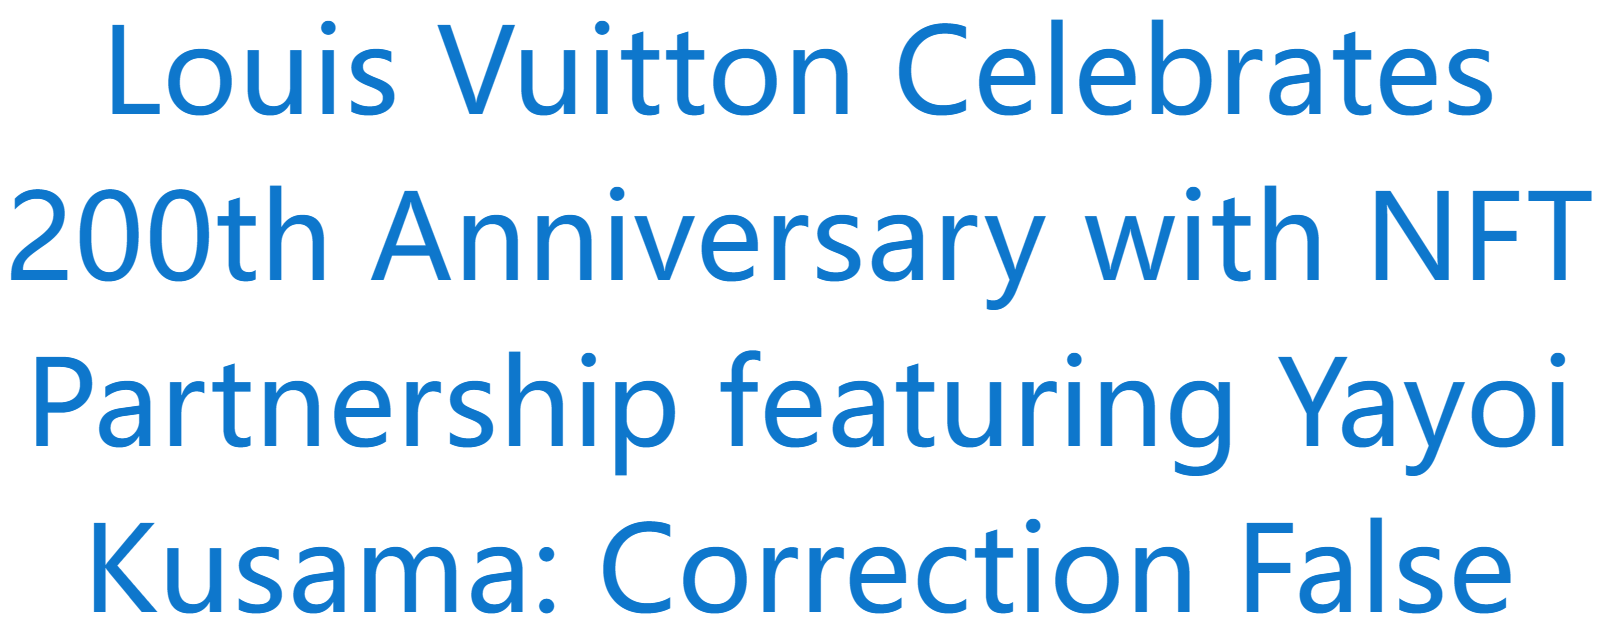 Louis Vuitton Celebrates 200th Anniversary with NFT Partnership featuring Yayoi  Kusama: Correction False, NFT CULTURE, NFT News, Web3 Culture